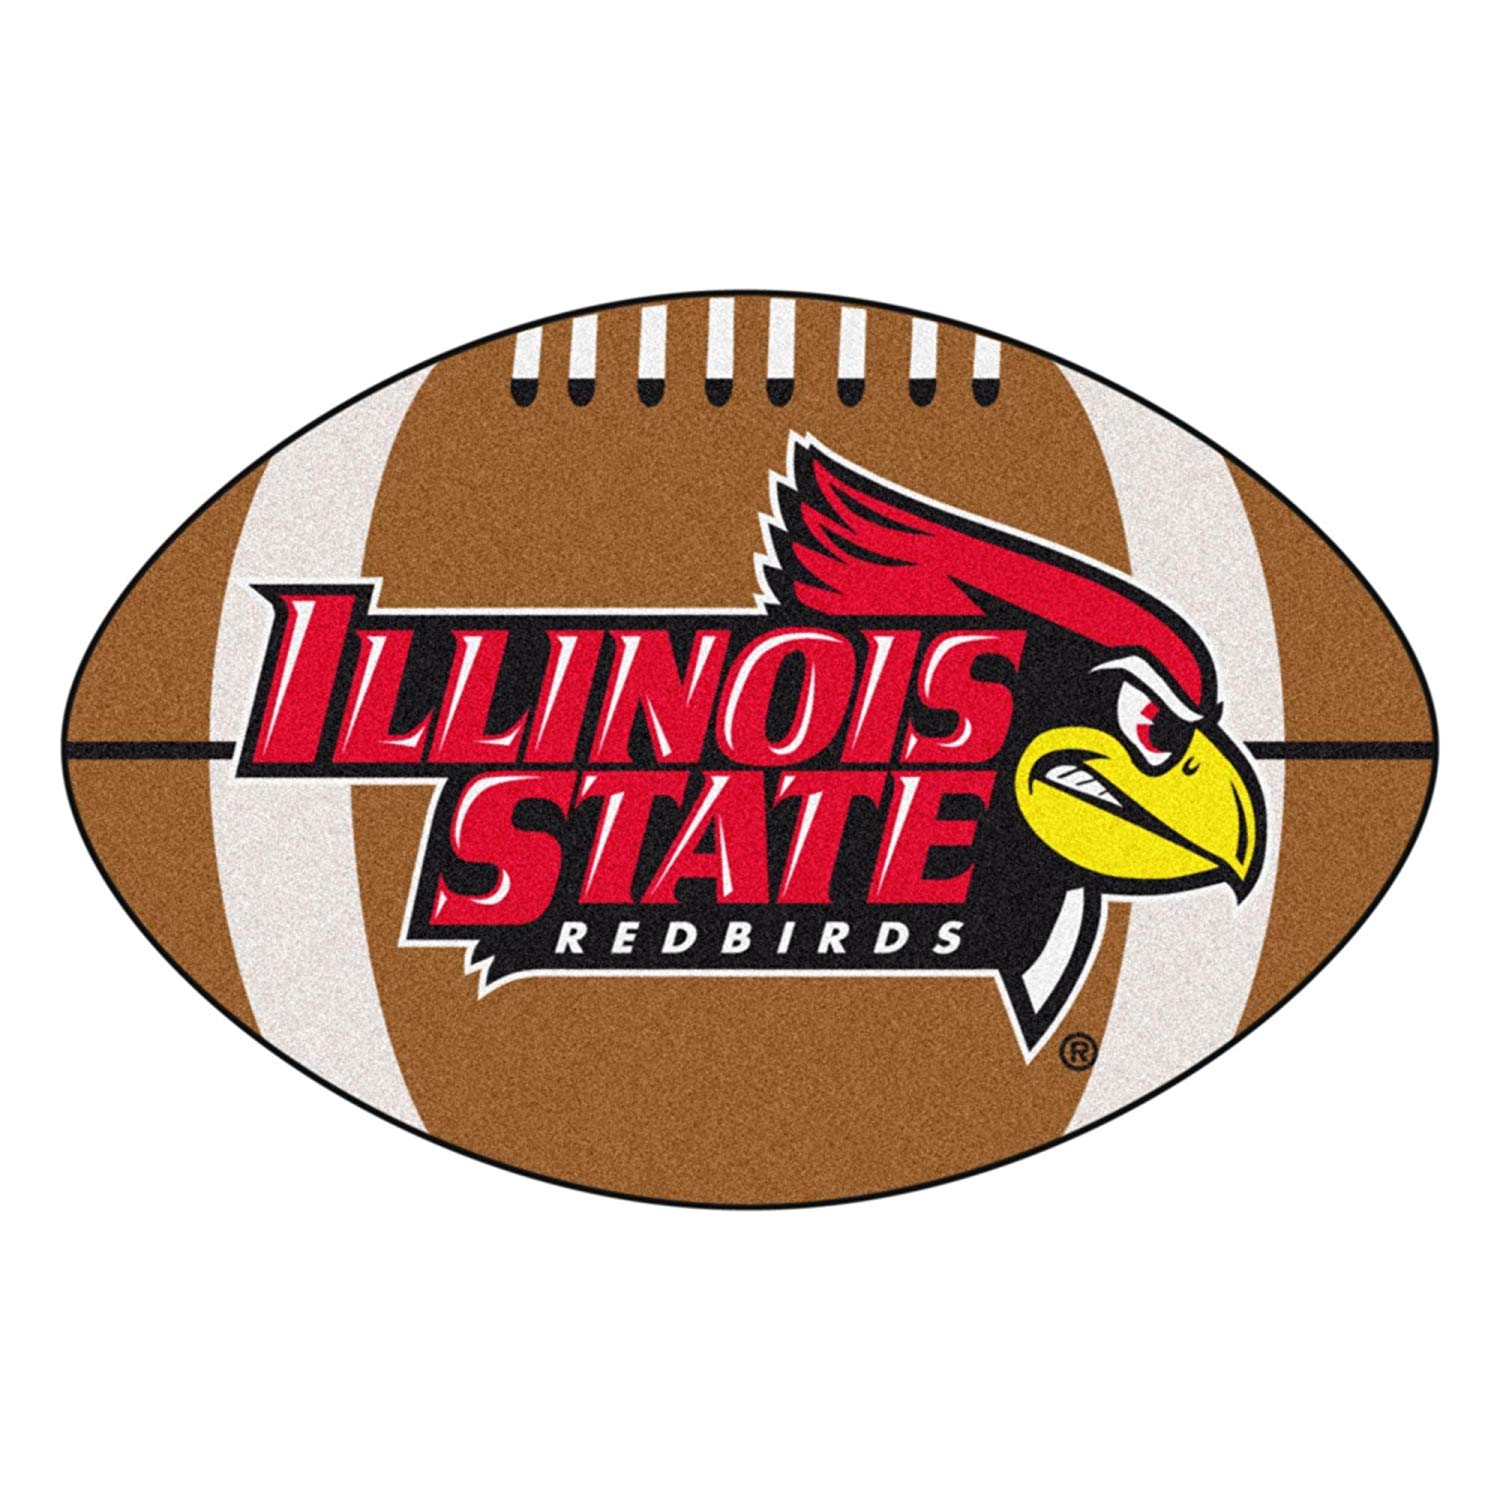 Illinois State Football Logo - Amazon.com : Football Rug w Illinois State Officially Licensed